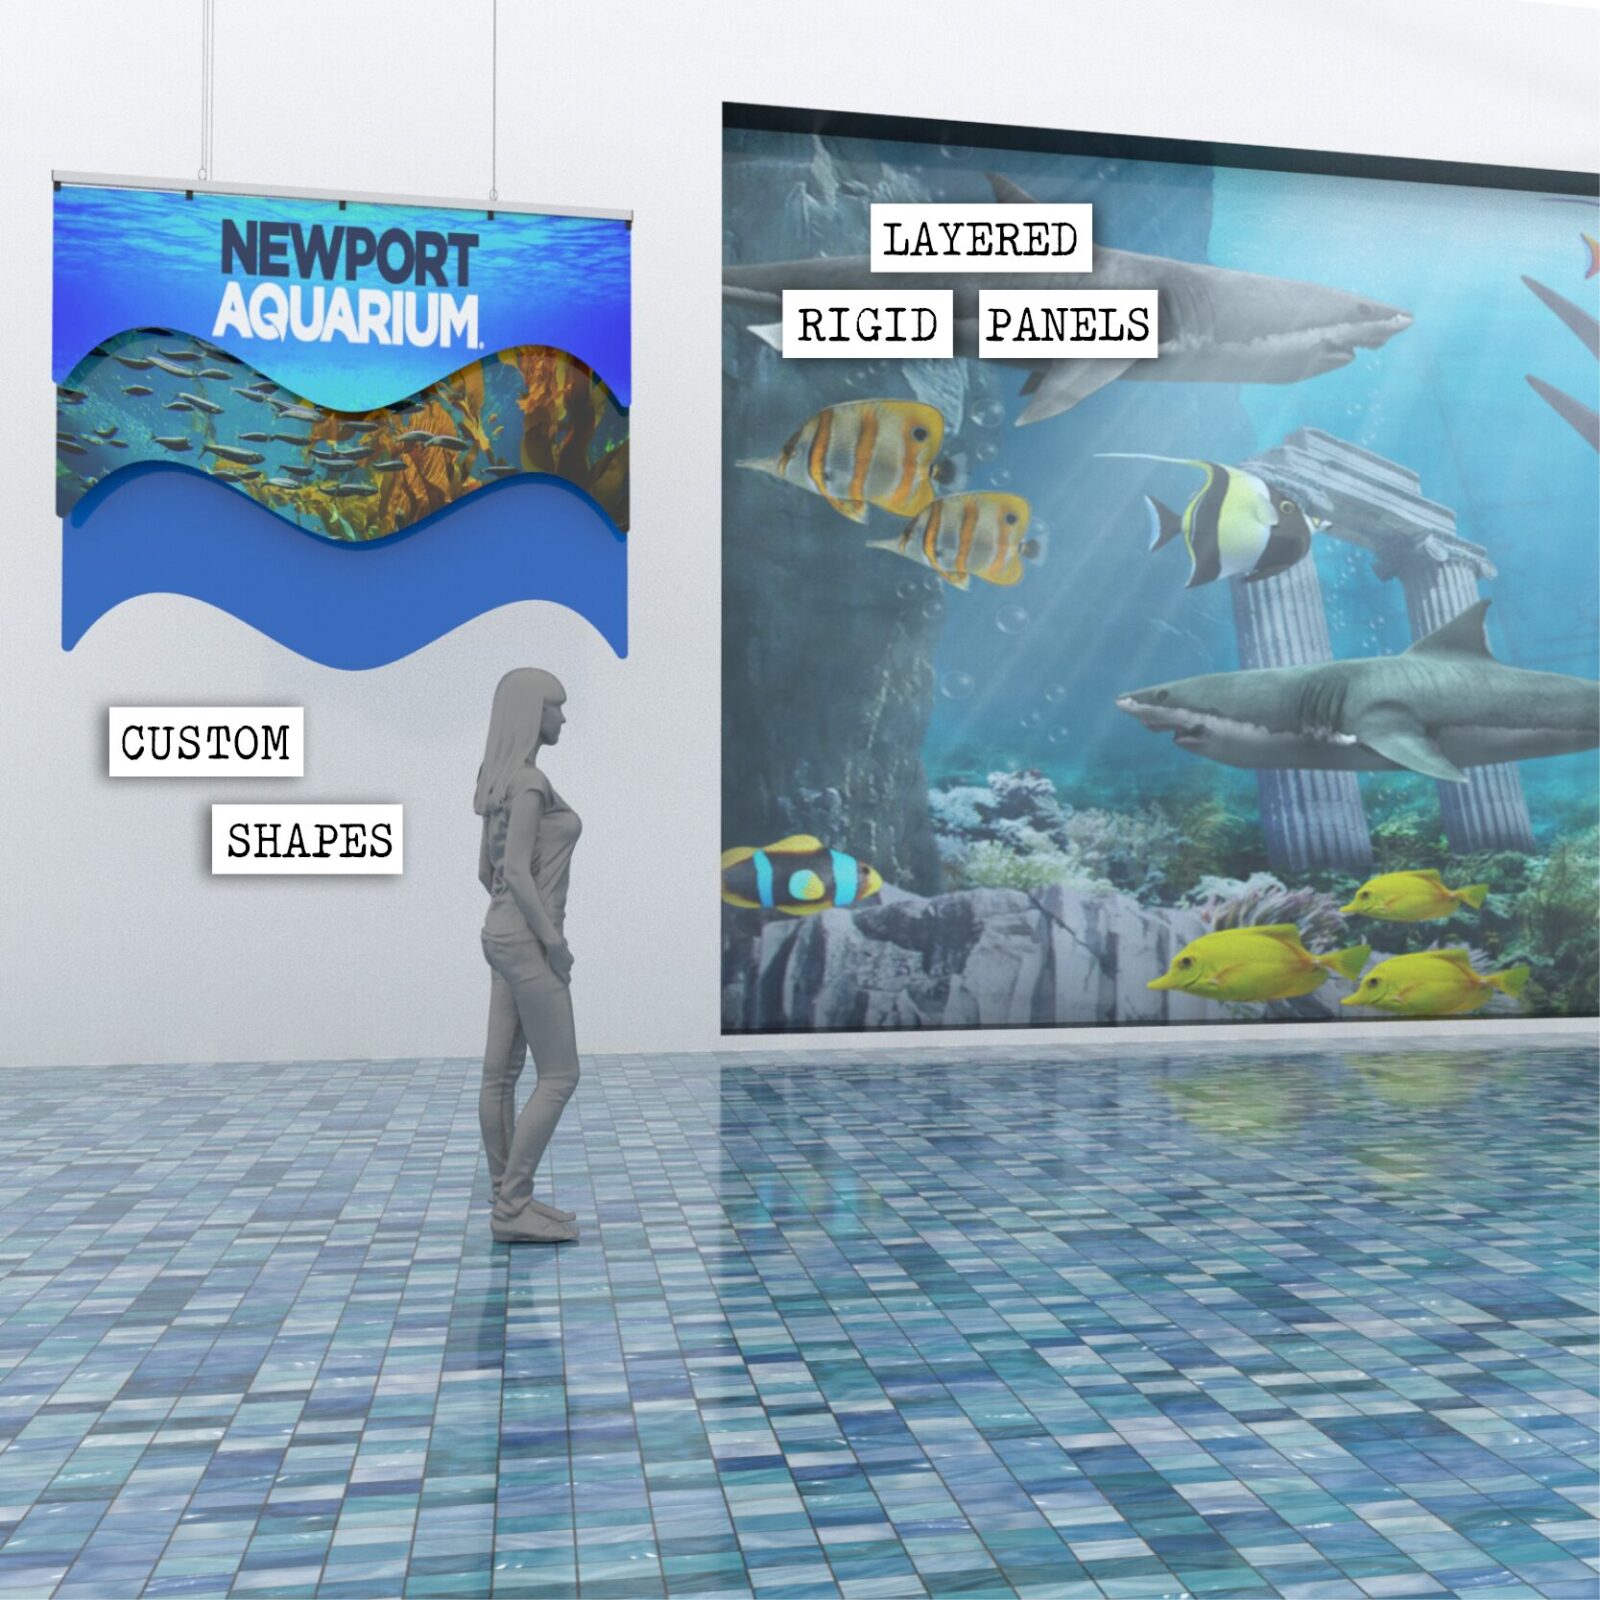 SEG Banner Rail Rendering layered in entrance of aquarium